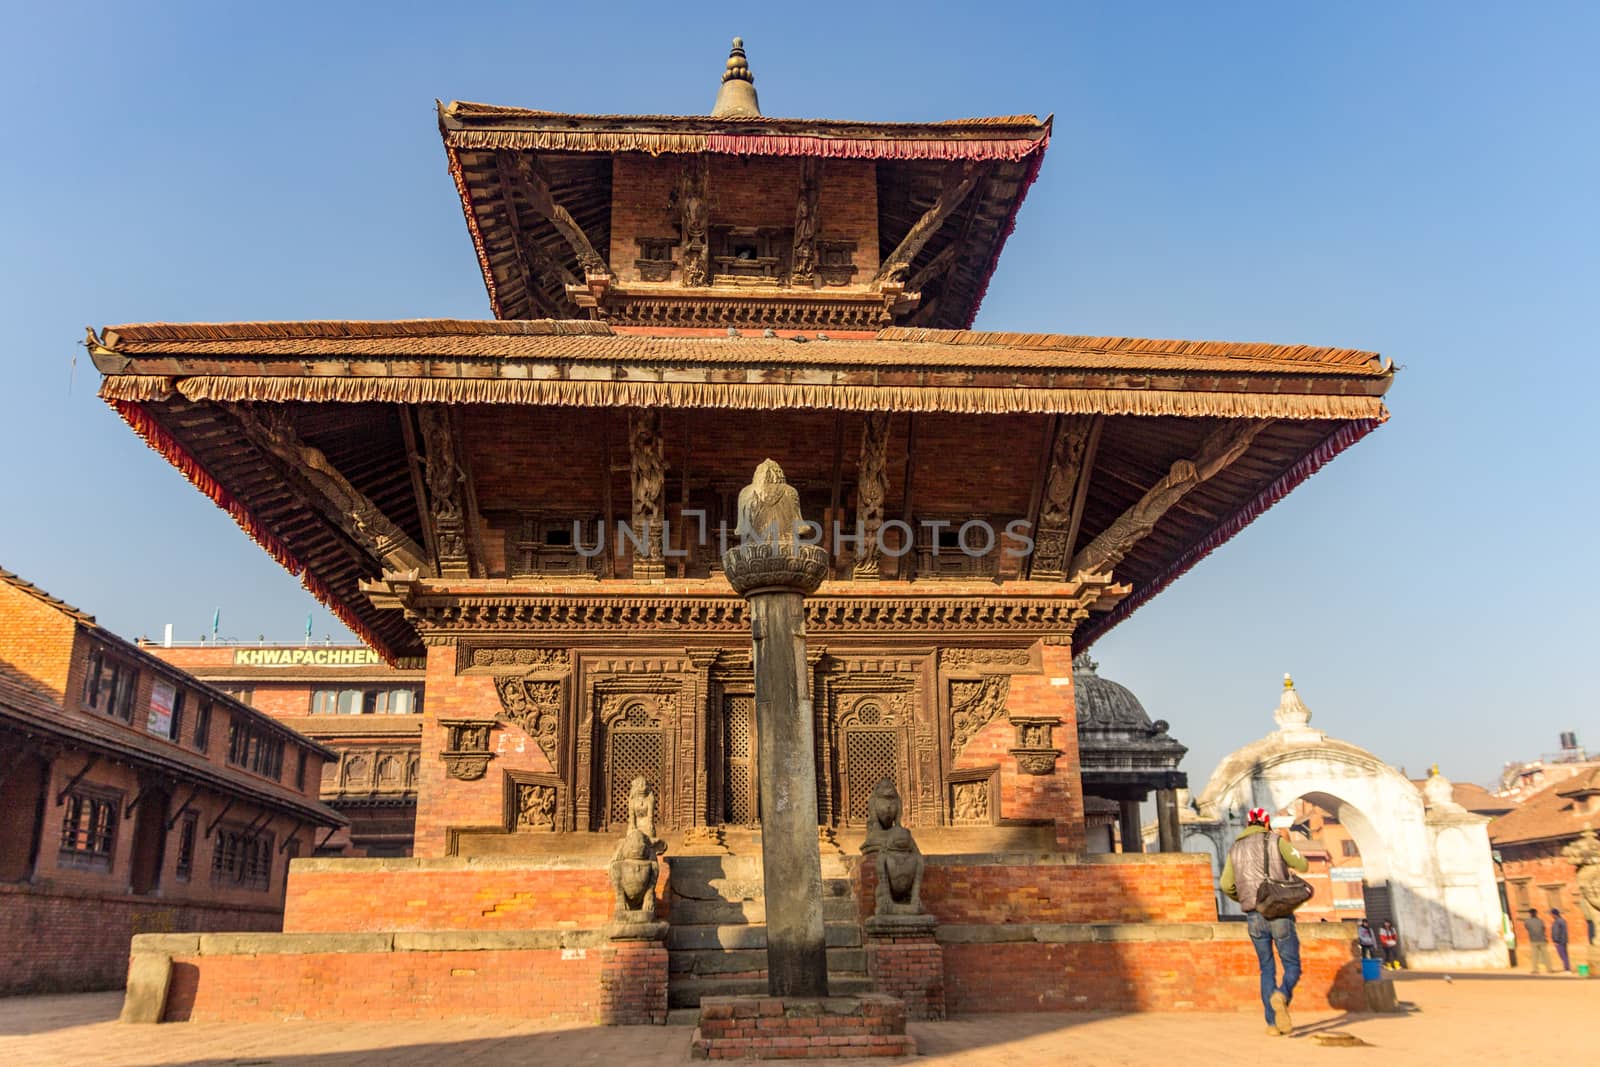 Kathmandu, Nepal - CIRCA 2020:Nepal Kathmandu Royal Patan palace complex in Patan Durbar Square famous place tourist attraction. Bhaktapur is UNESCO World Heritage site located in the Kathmandu Valley by dugulan